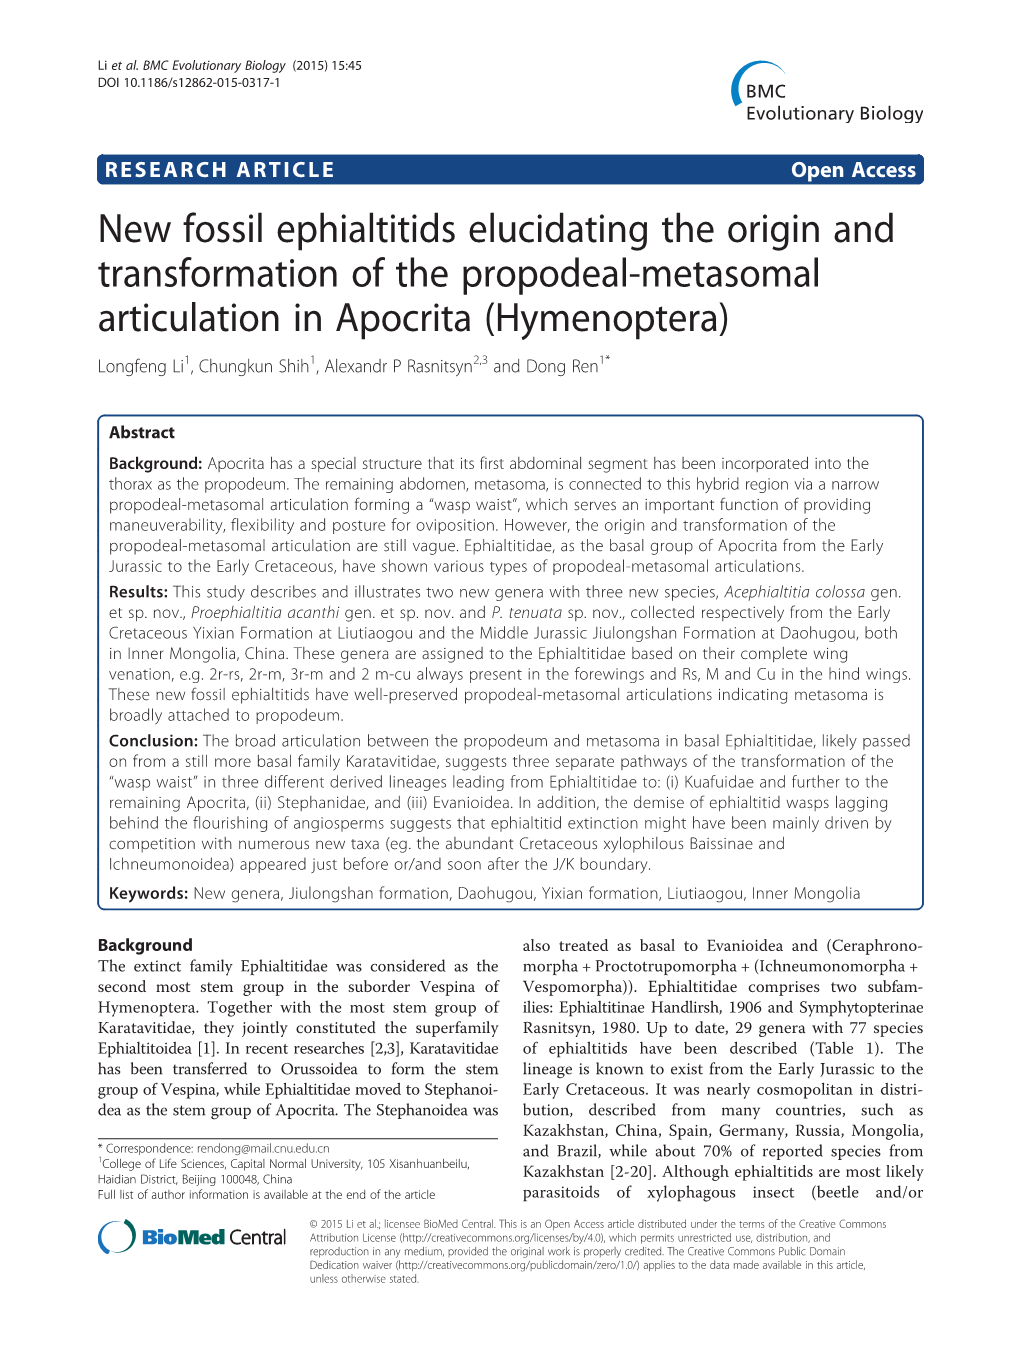 New Fossil Ephialtitids Elucidating the Origin